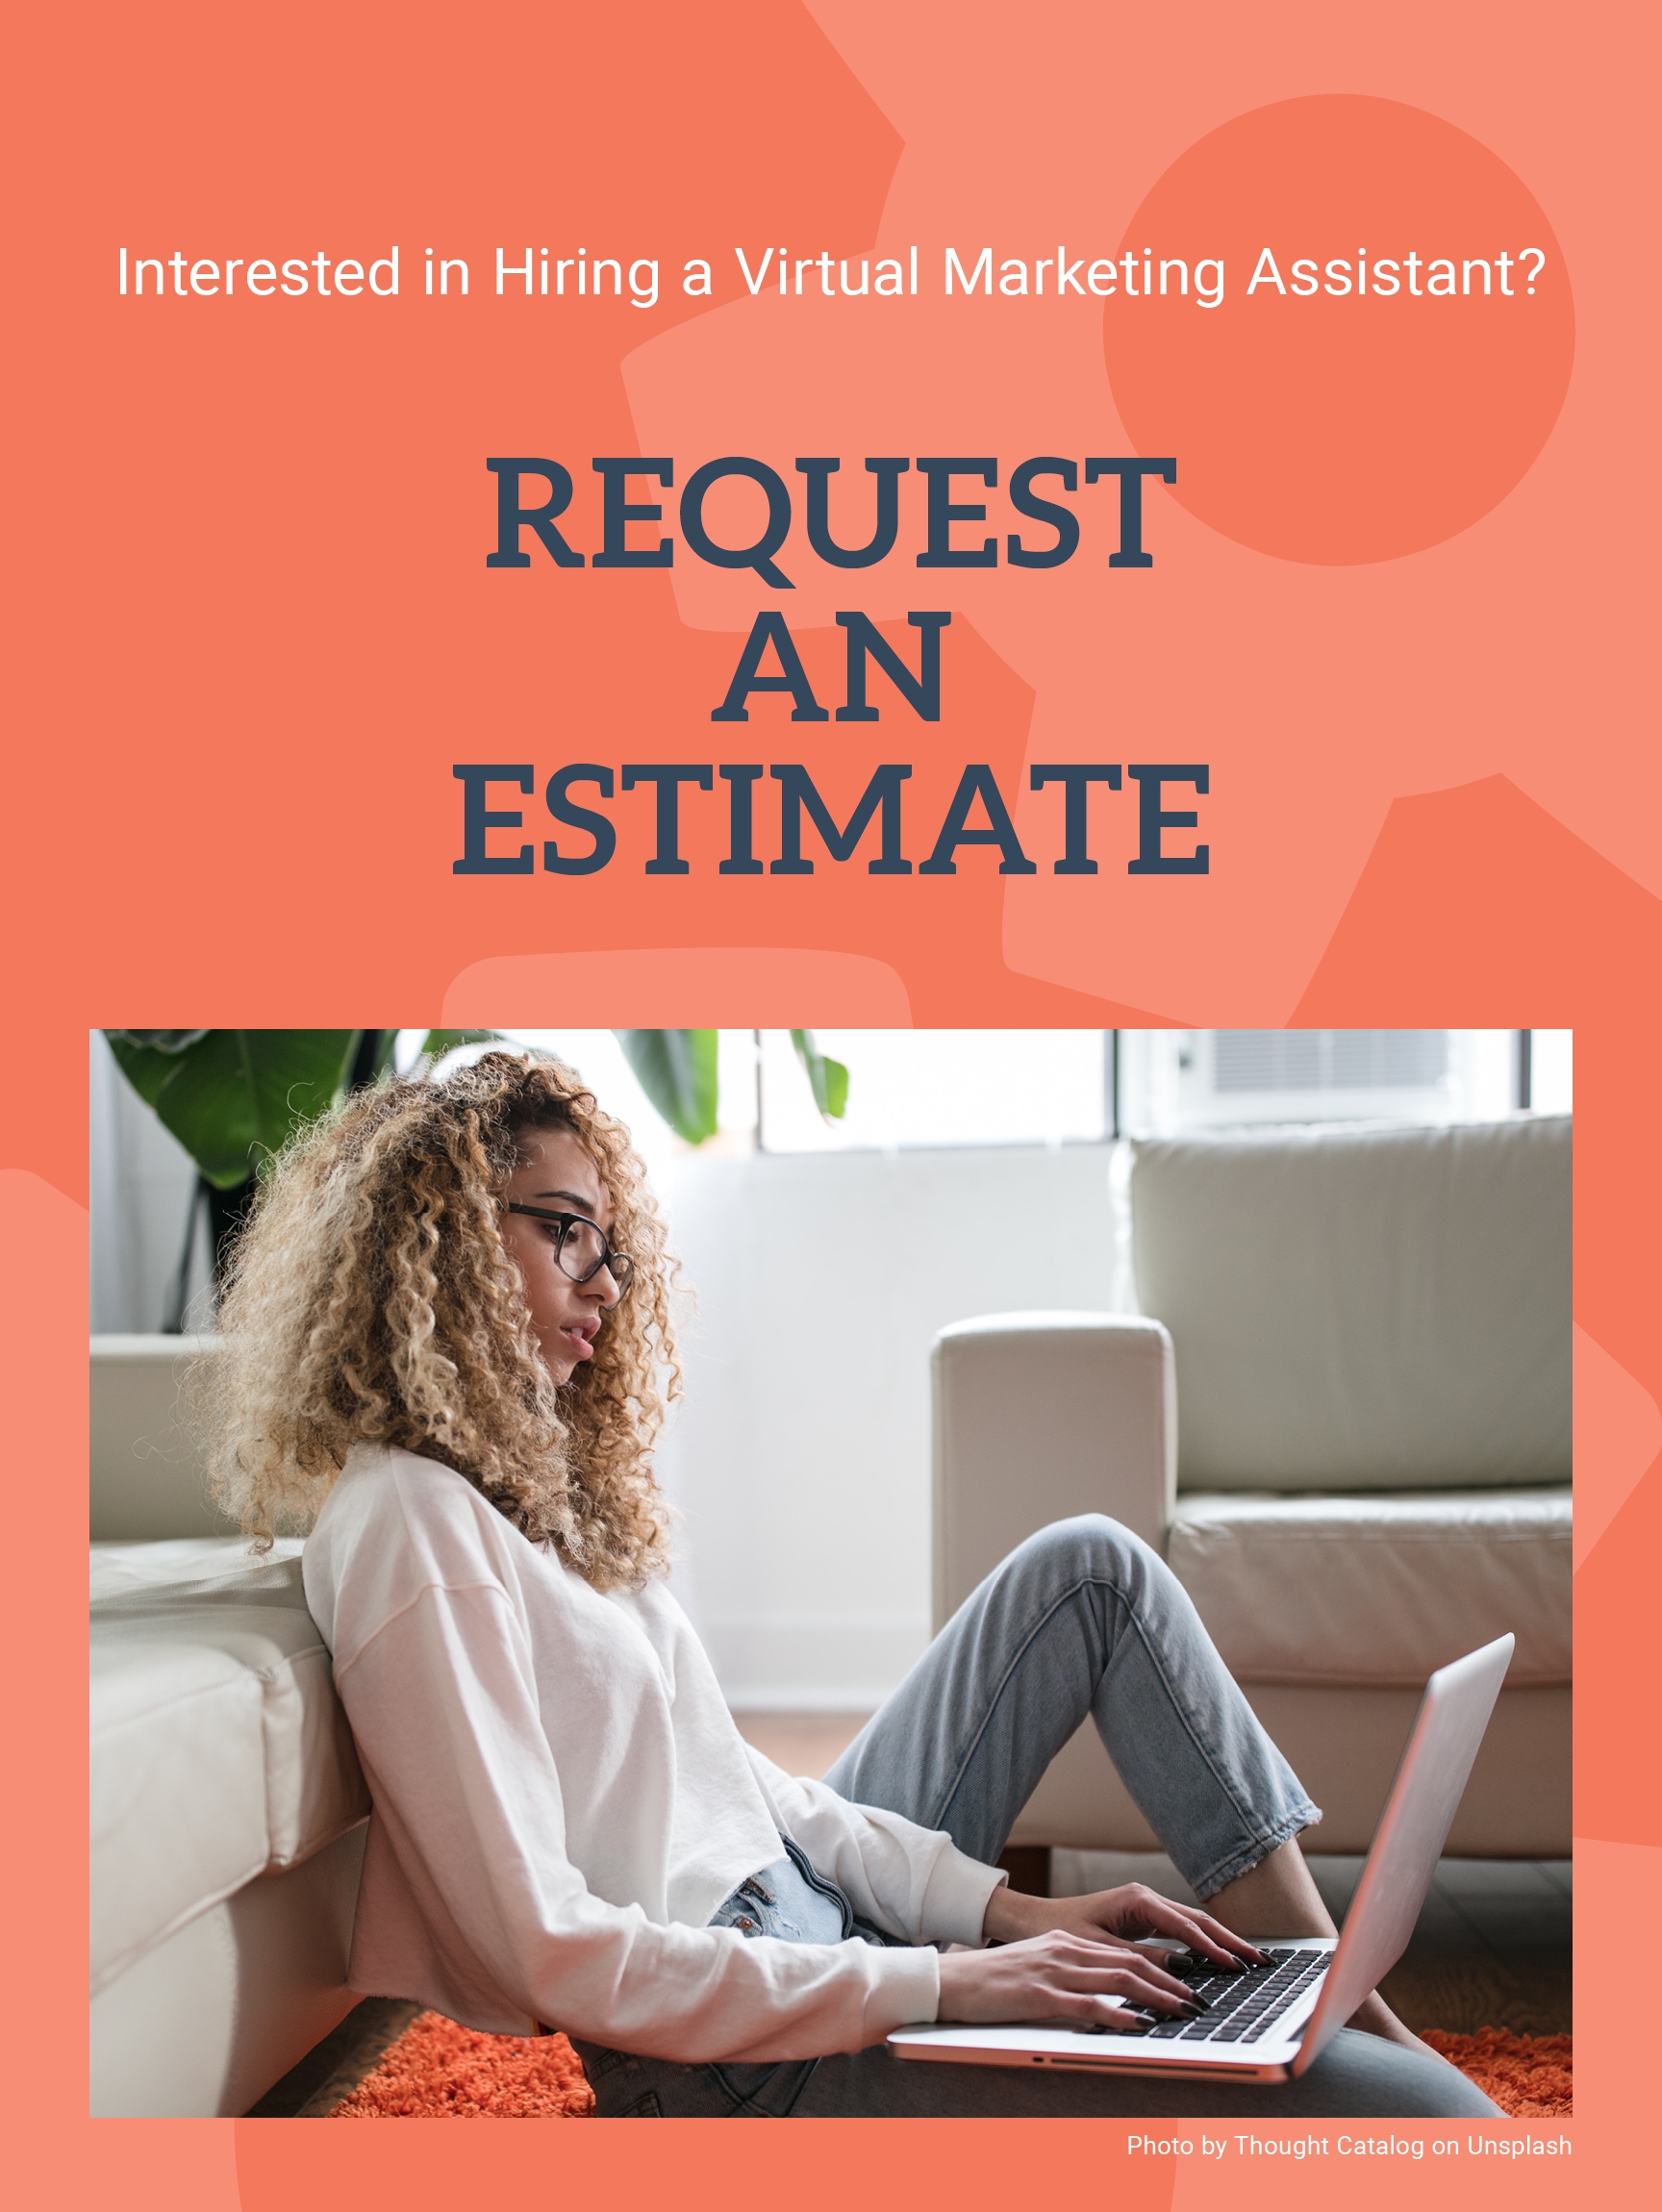 Request an Estimate - Remote Marketing Assistants